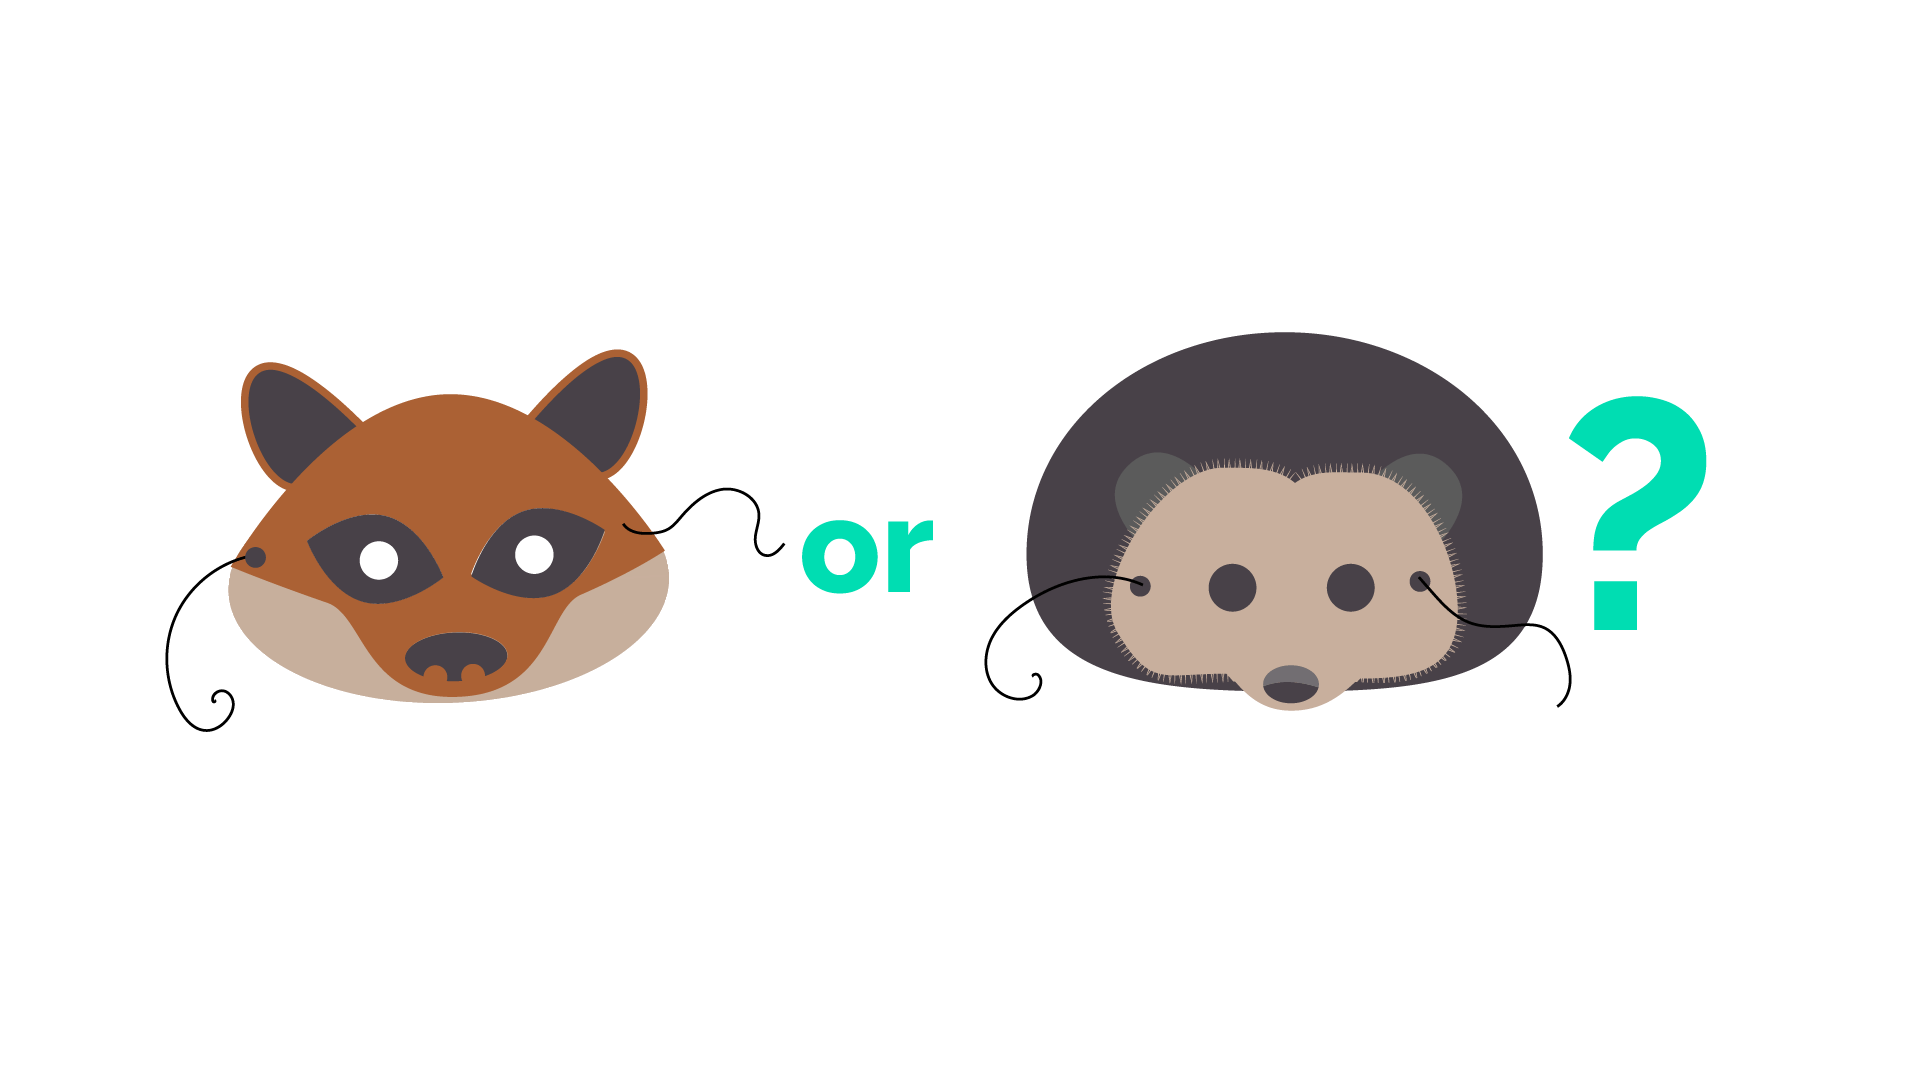 Fox or hedgehog?